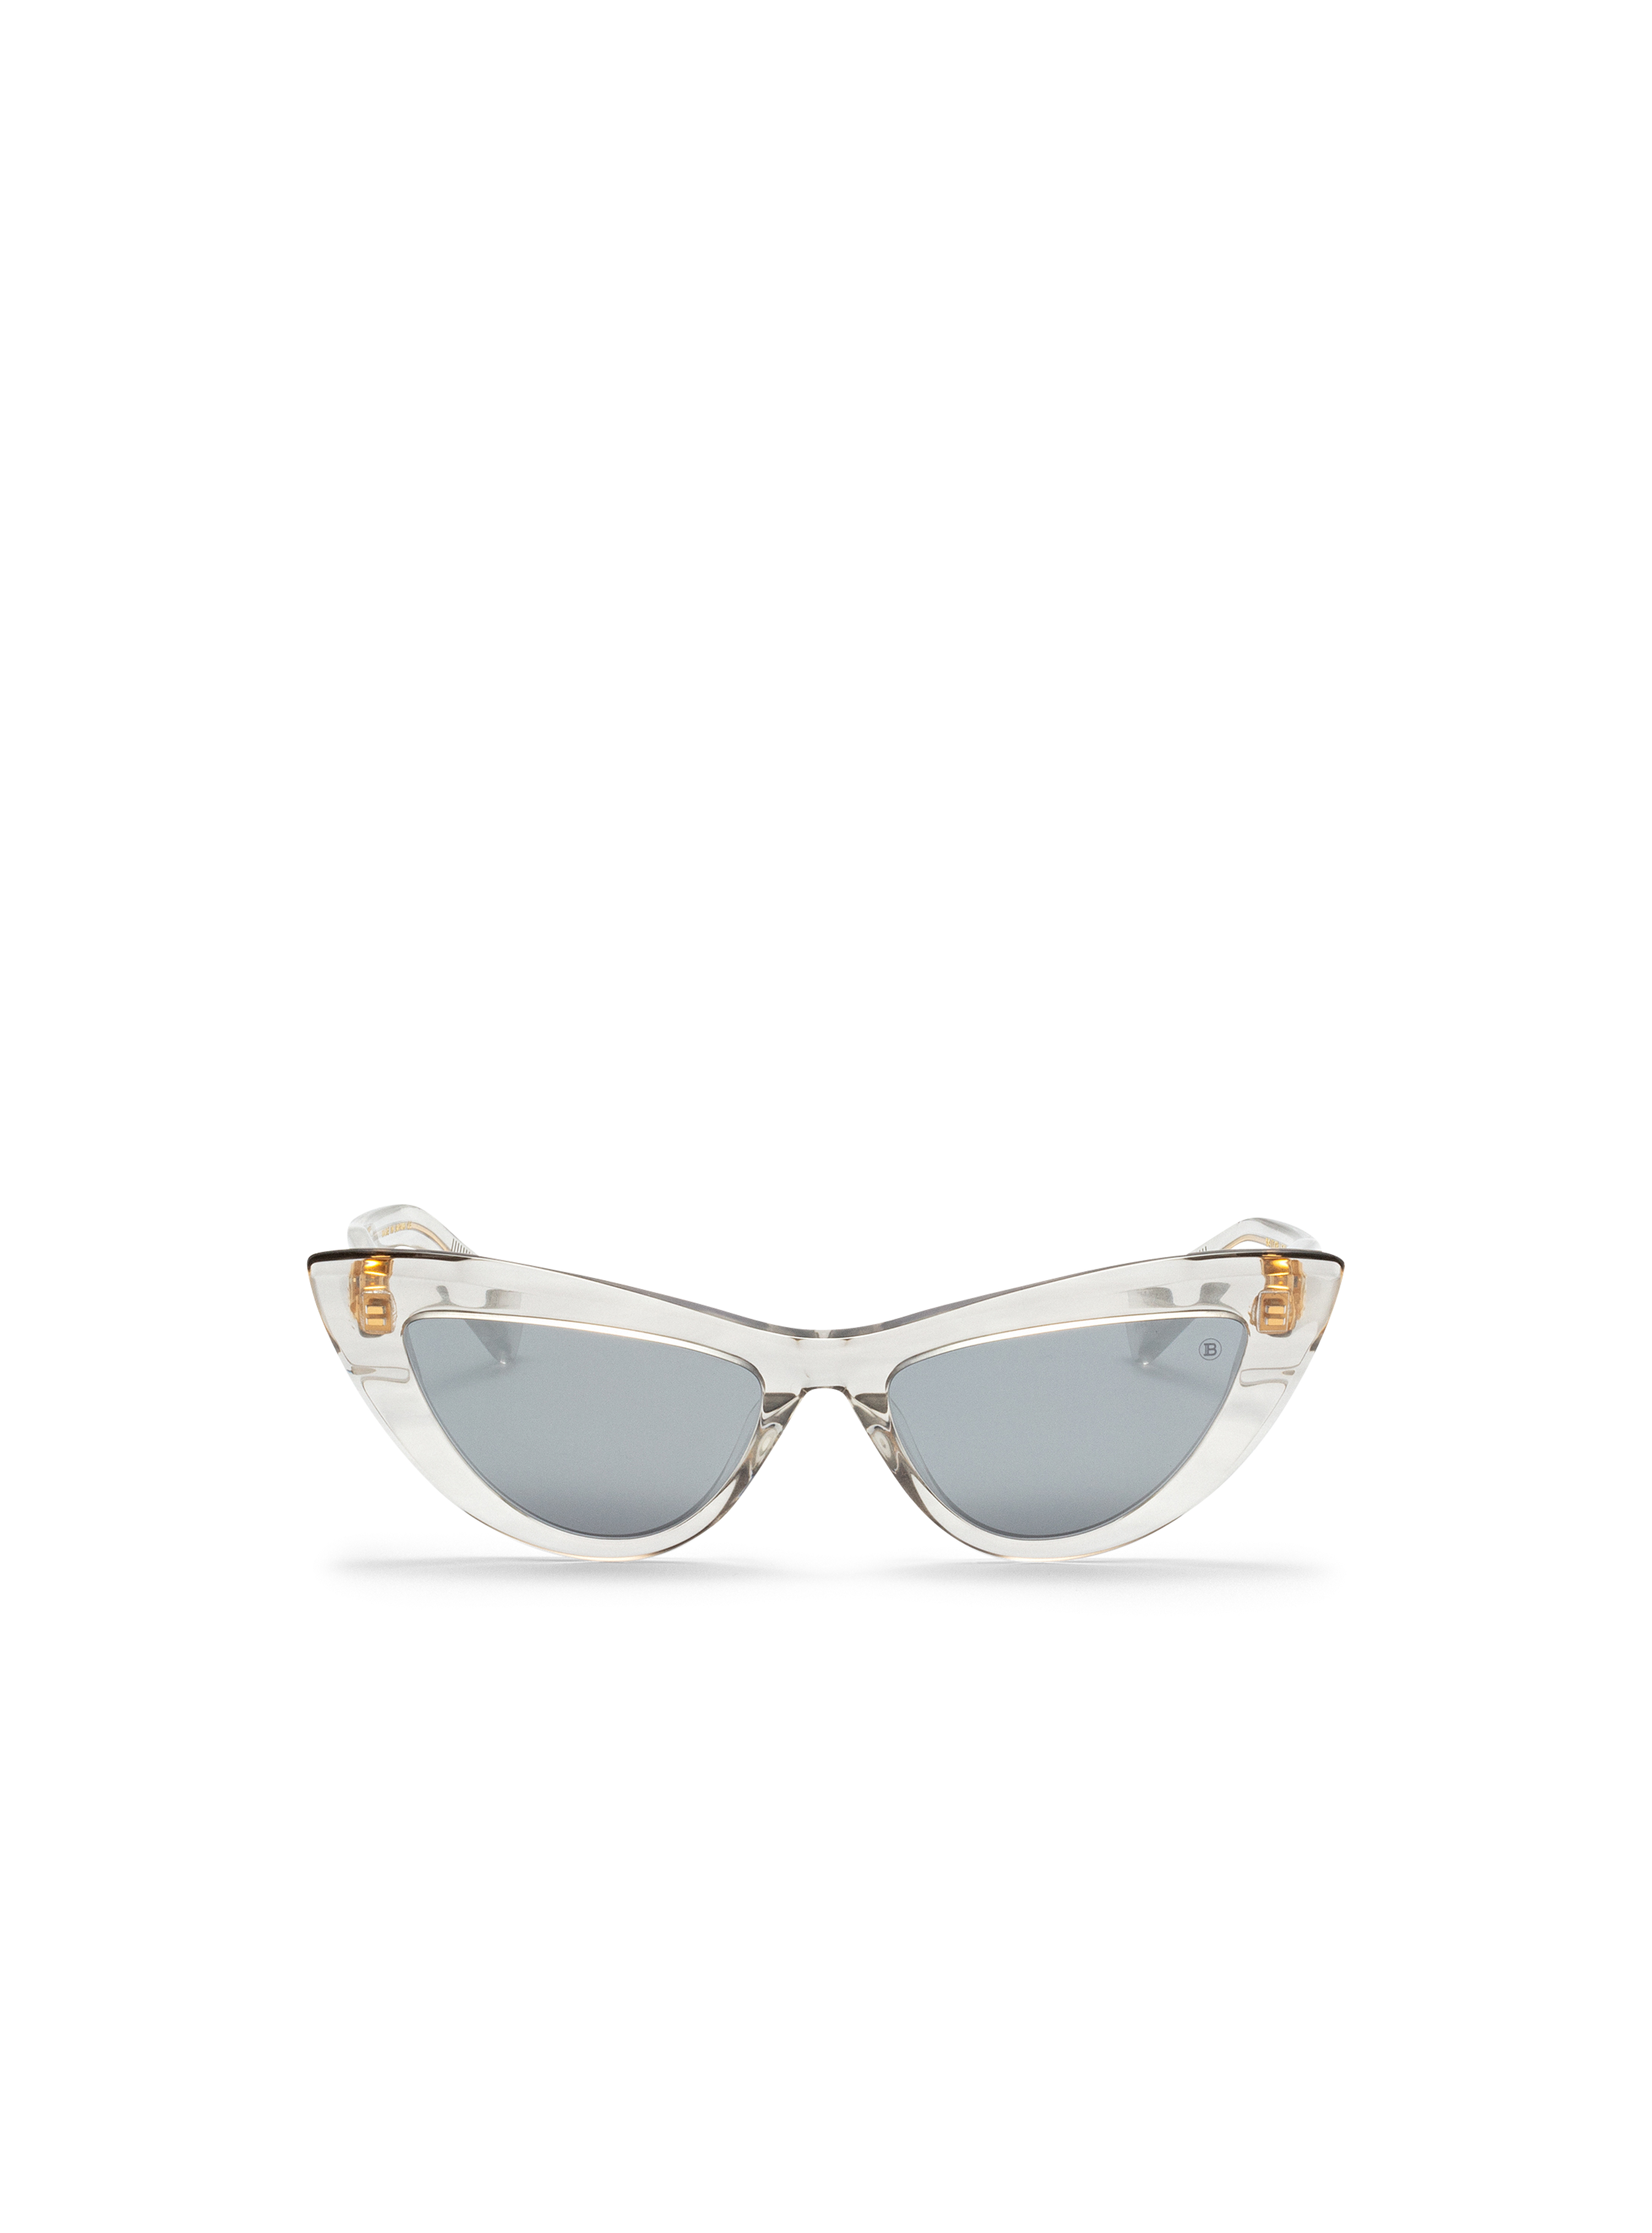 Jolie Sunglasses, grey